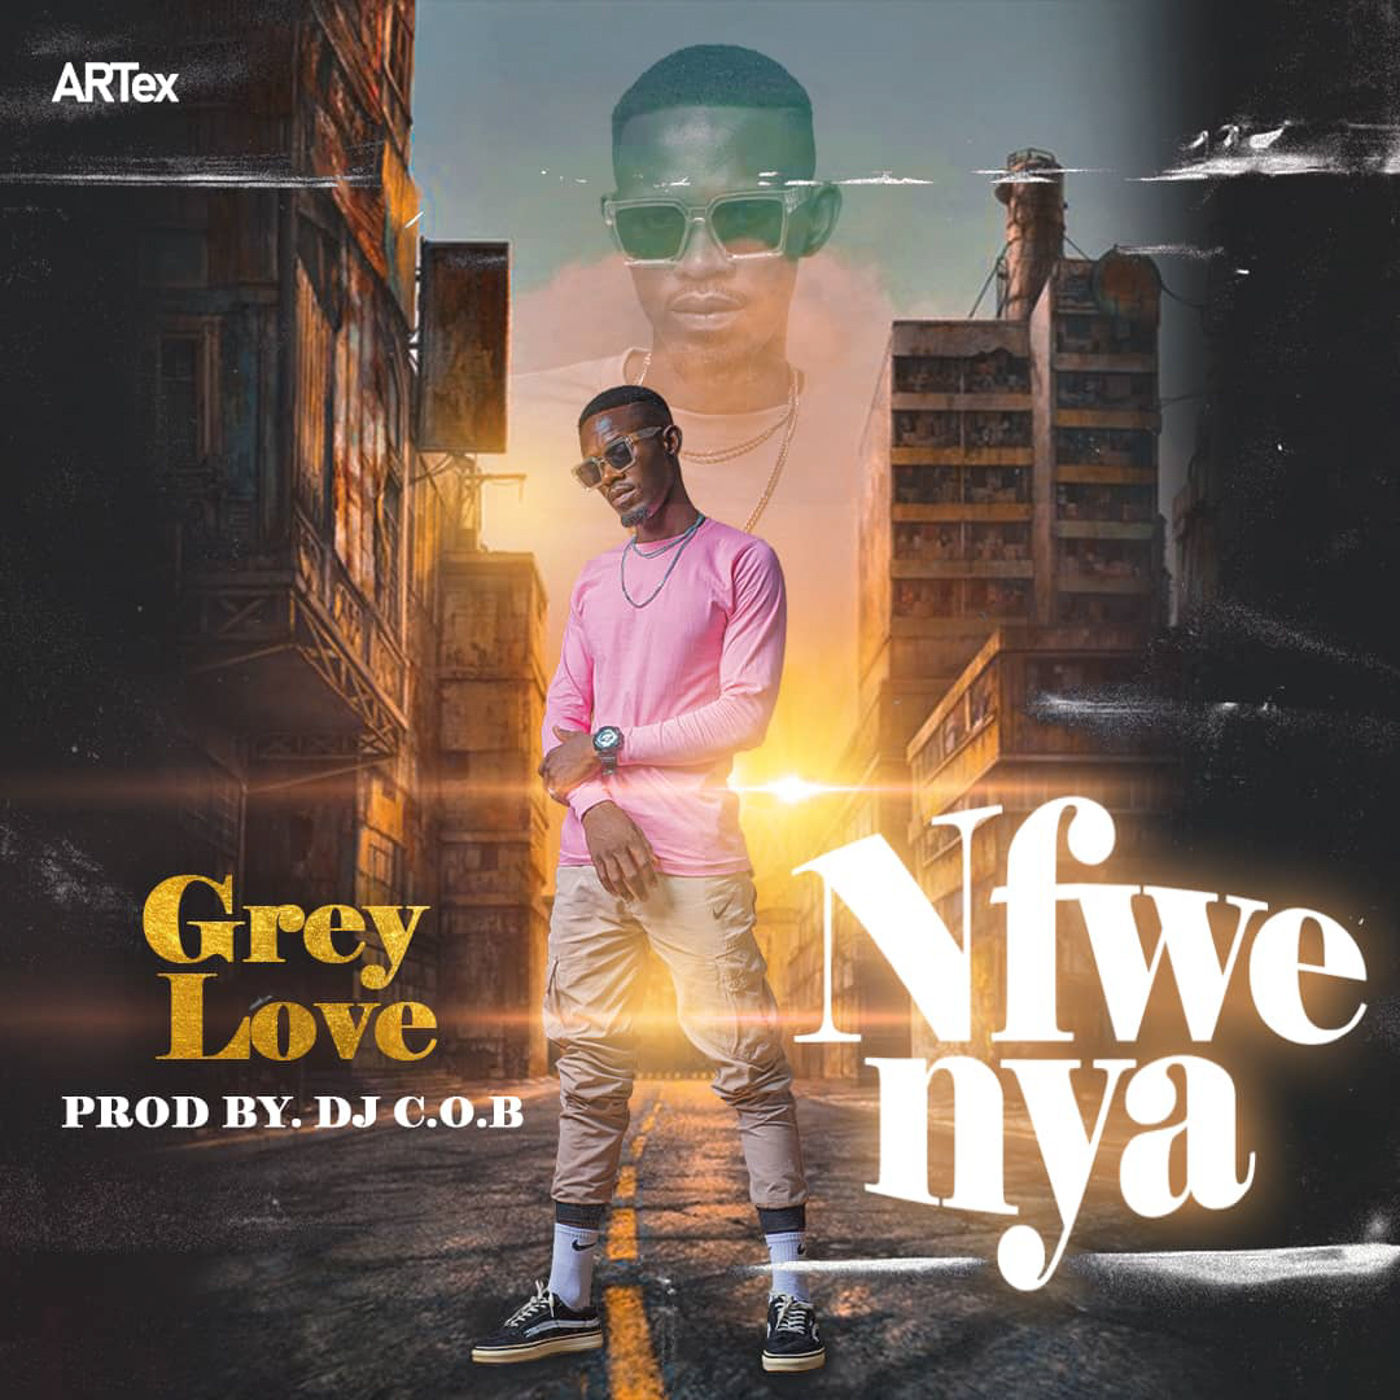 Grey Love - Nfwenya